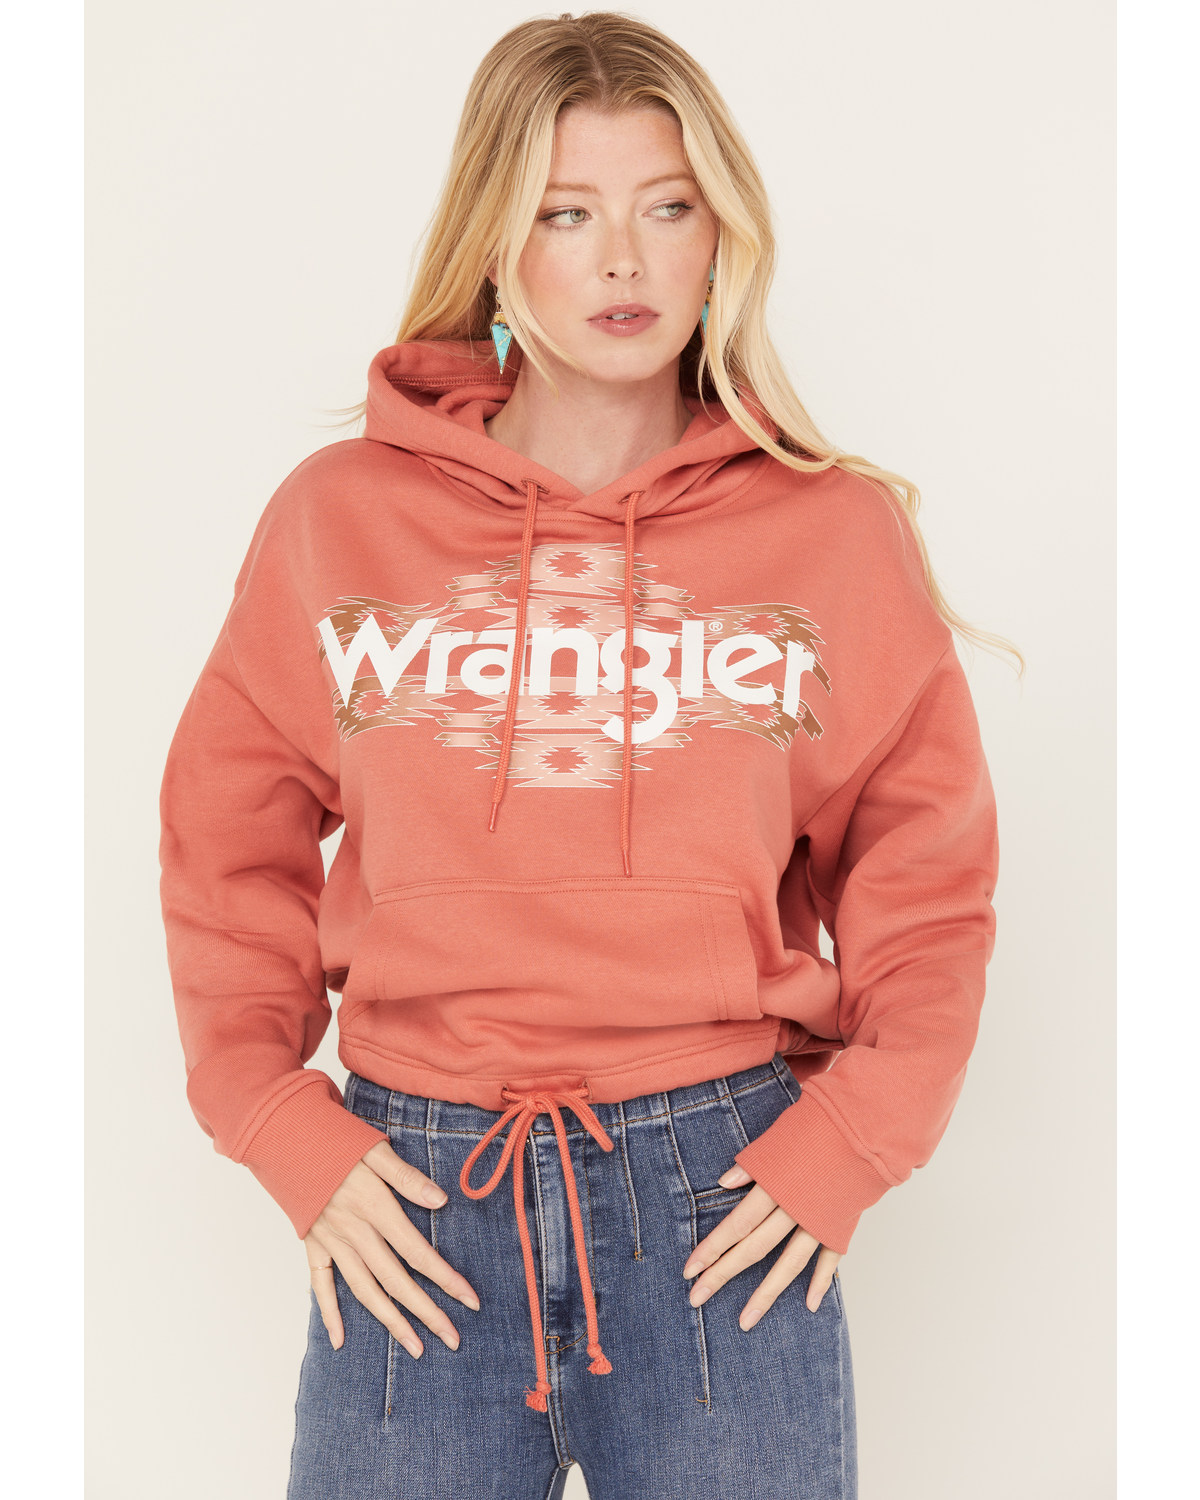 Wrangler Retro Women's Southwestern Print Logo Cropped Long Sleeve Hoodie